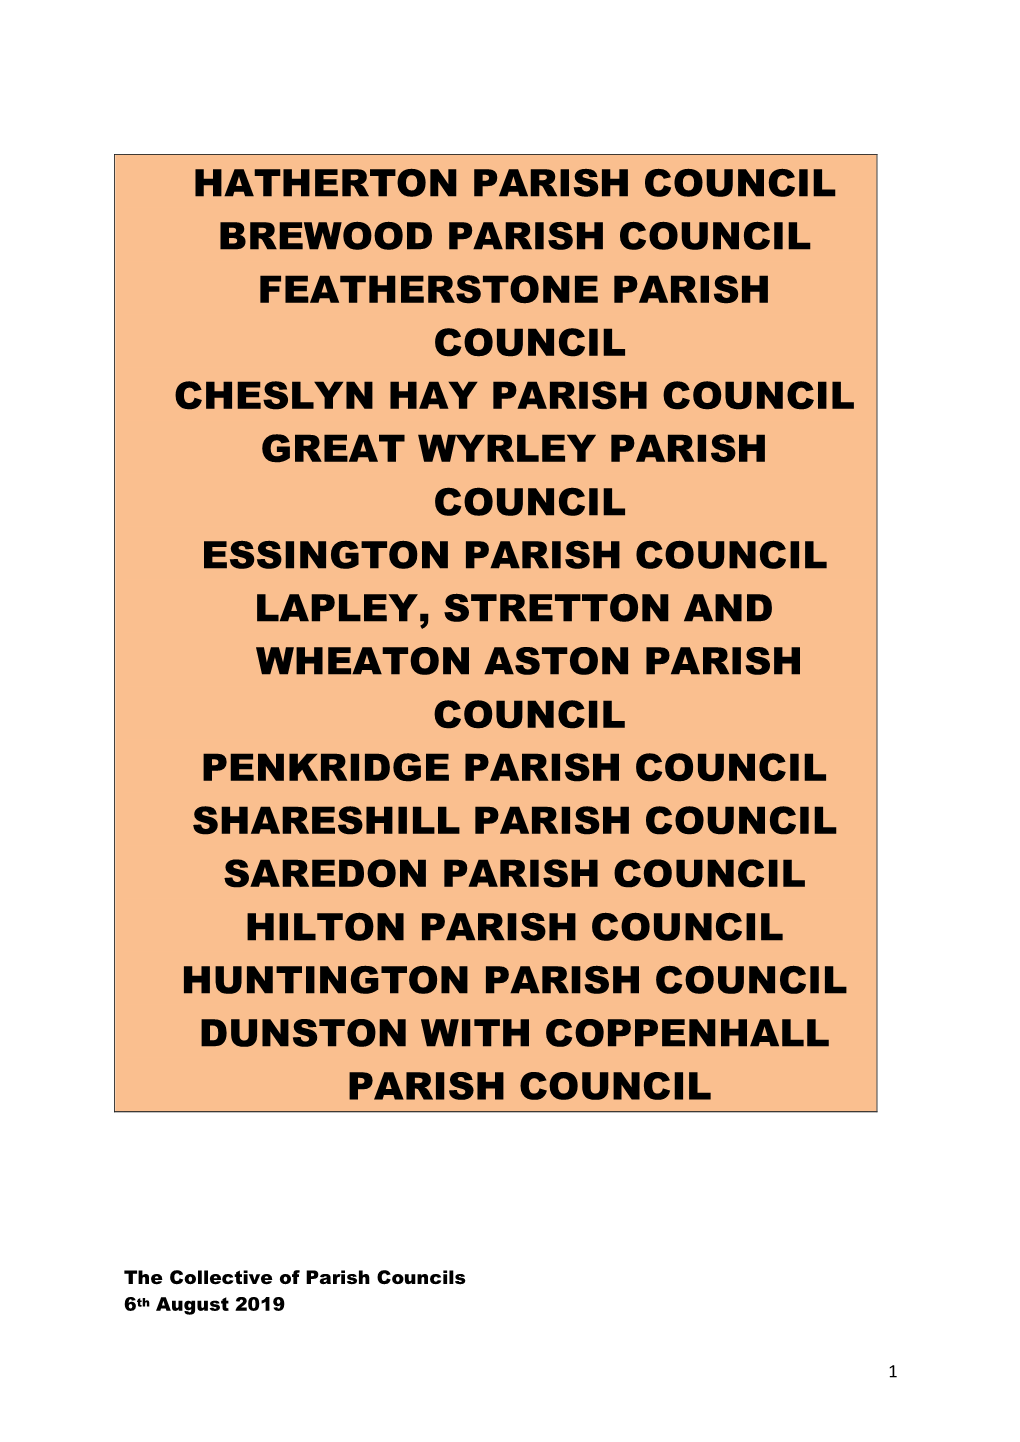 Hatherton Parish Council Brewood Parish Council Featherstone Parish Council Cheslyn Hay Parish Council Great Wyrley Parish